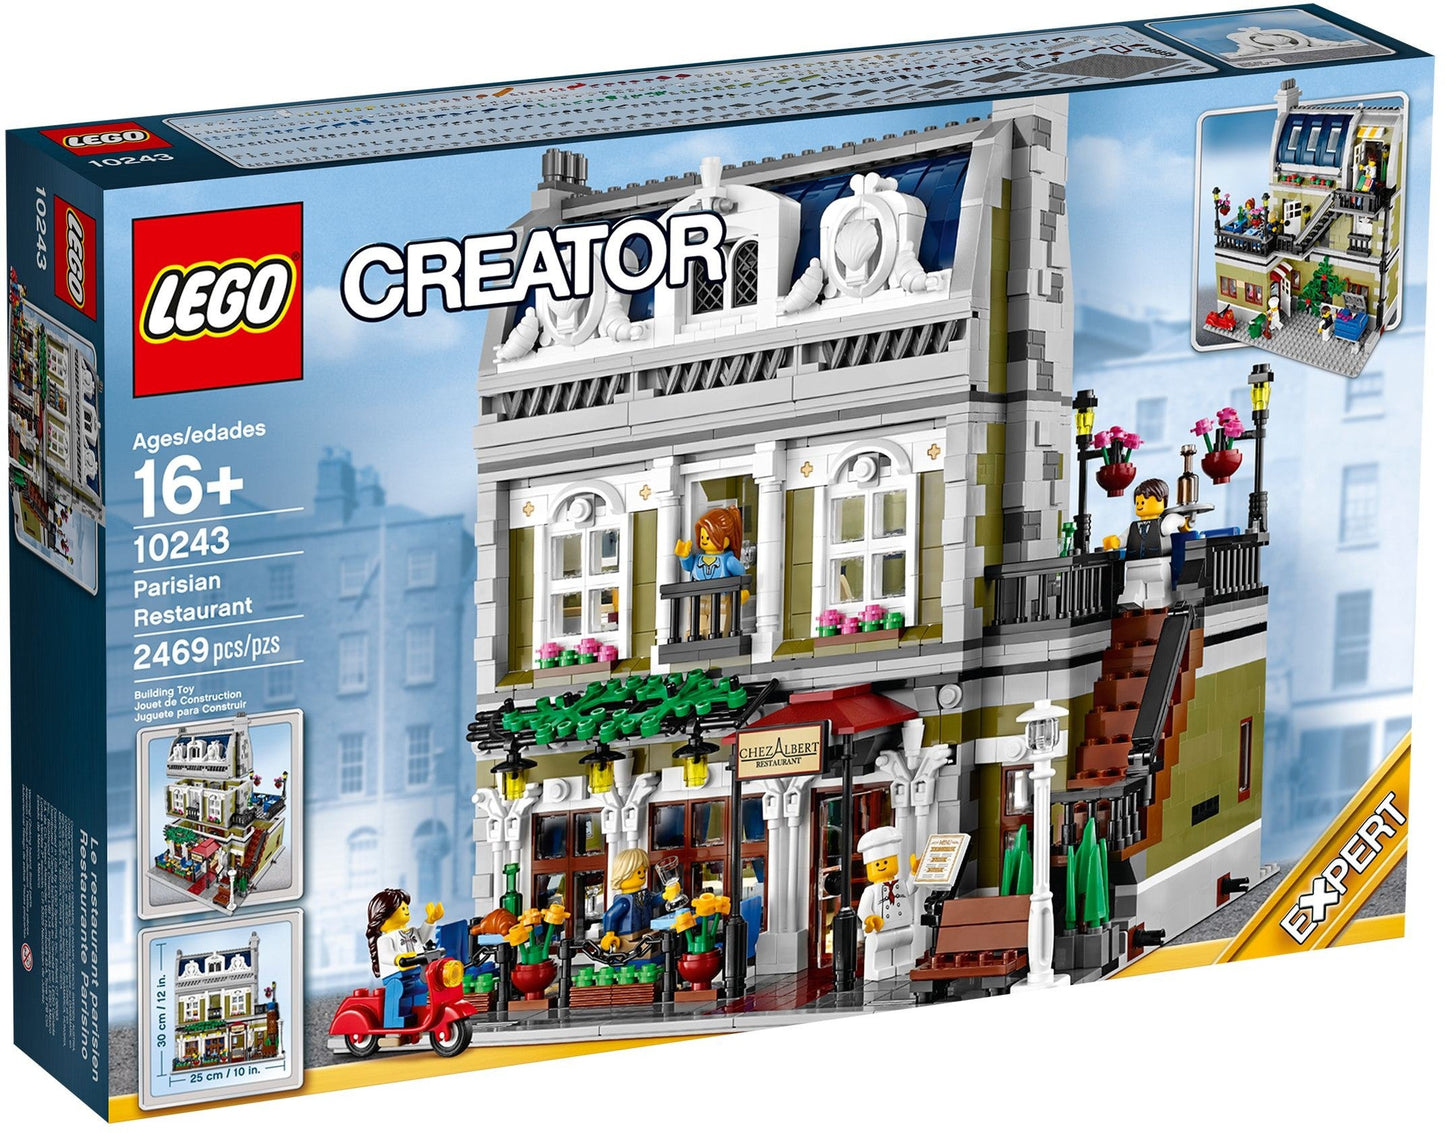 10243 Parisian Restaurant (Retired) LEGO Creator Expert